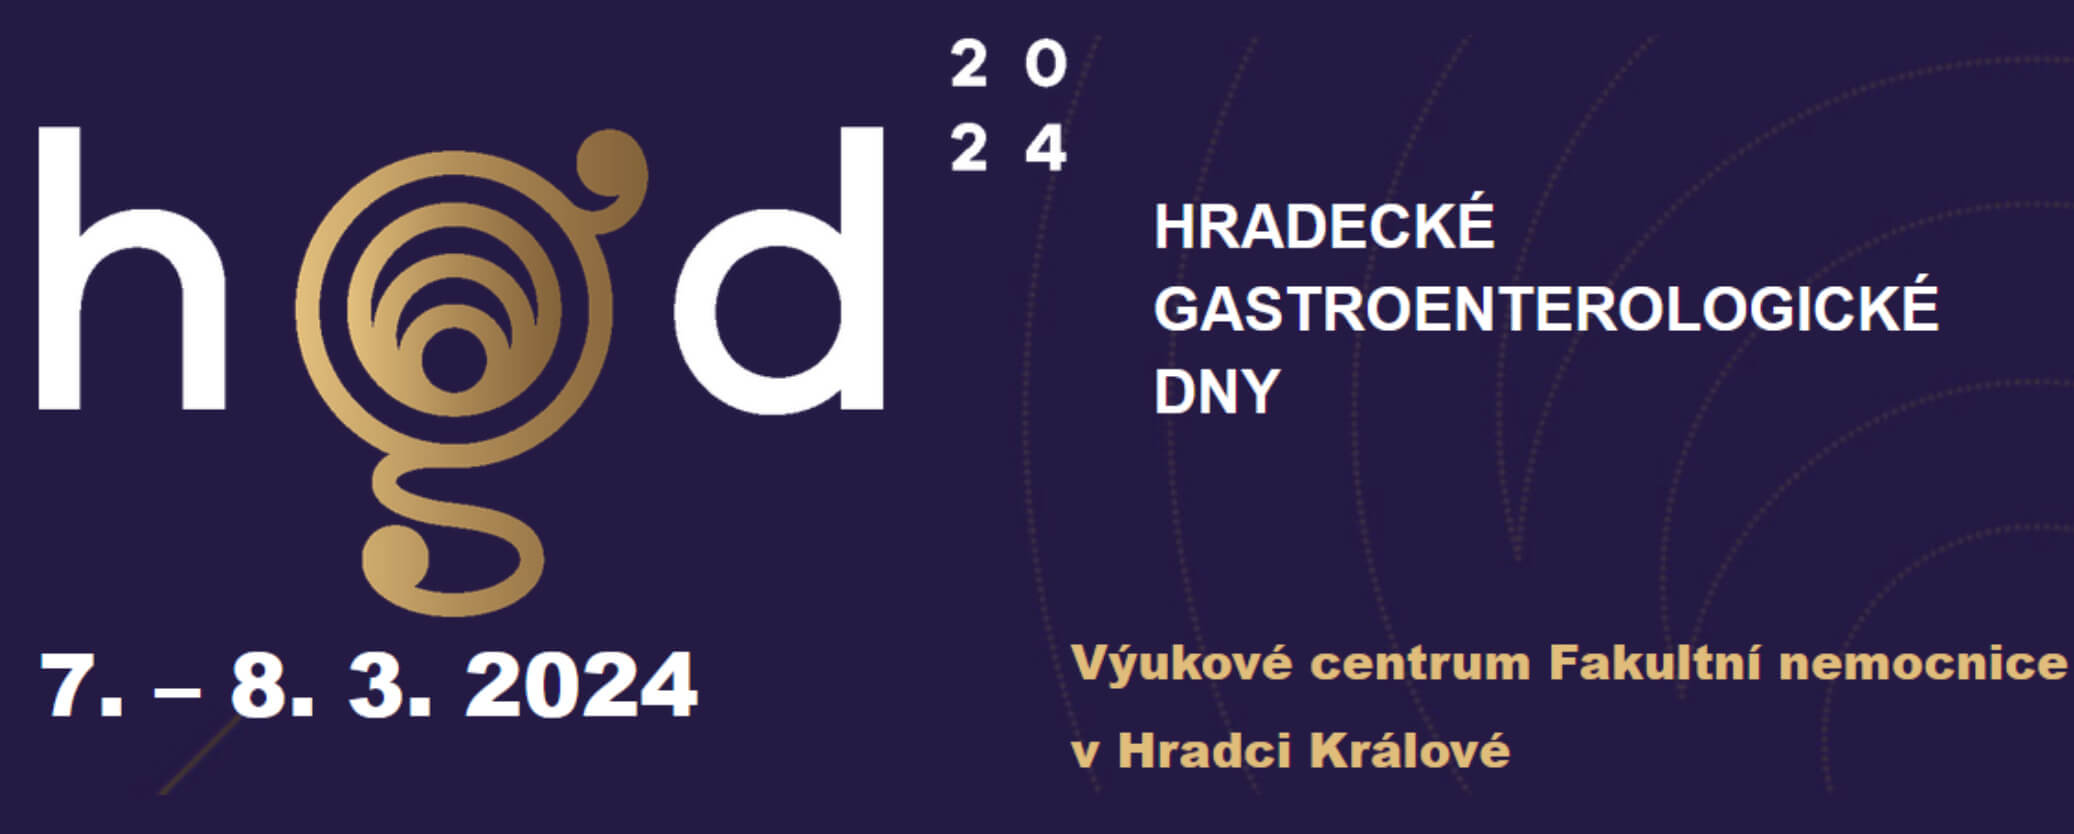 26. Hradecké gastroenterologické dny (HGD 2024)